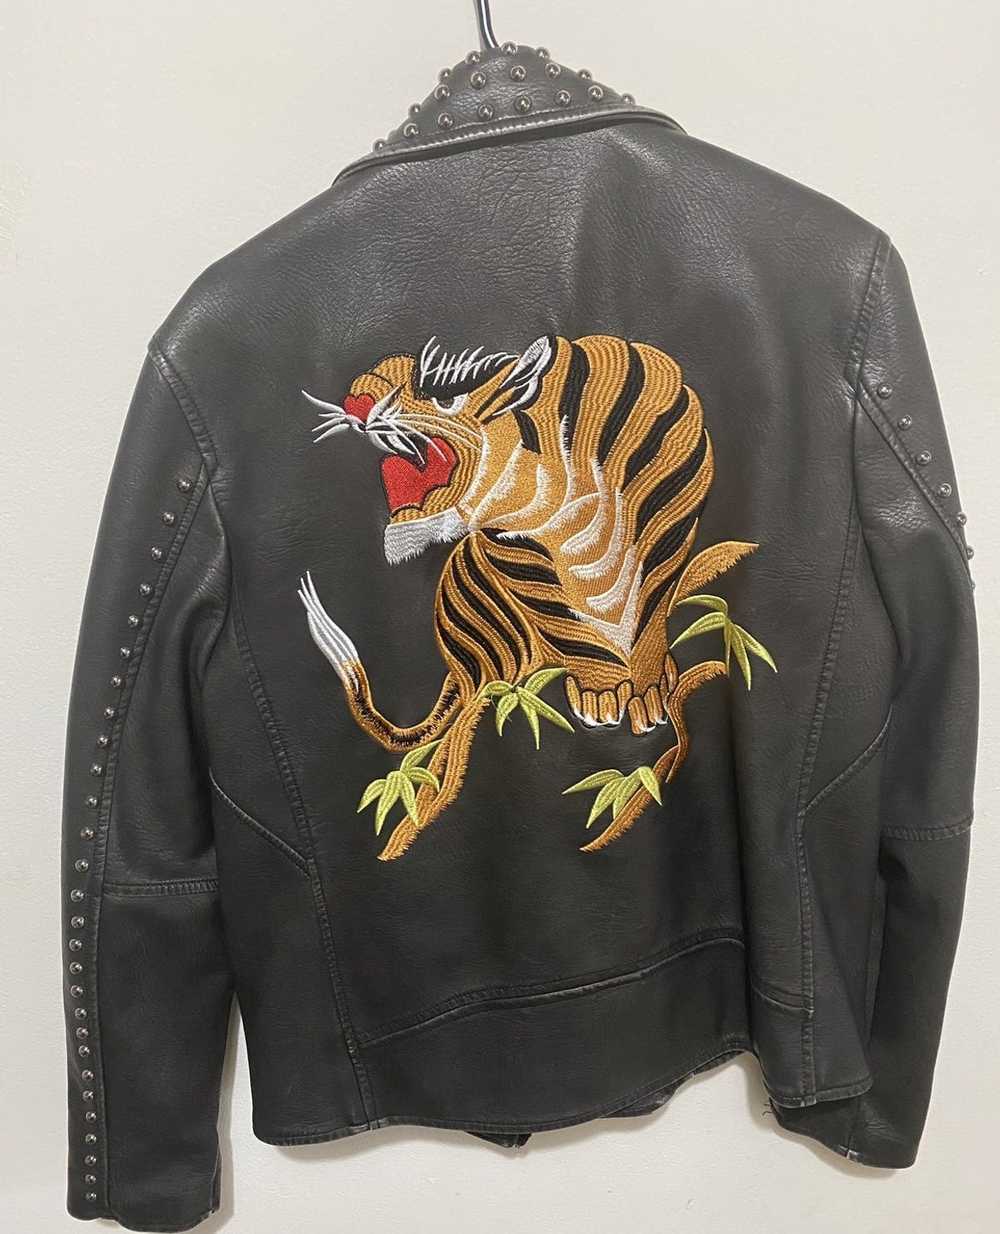 Vintage Moto jacket - image 2